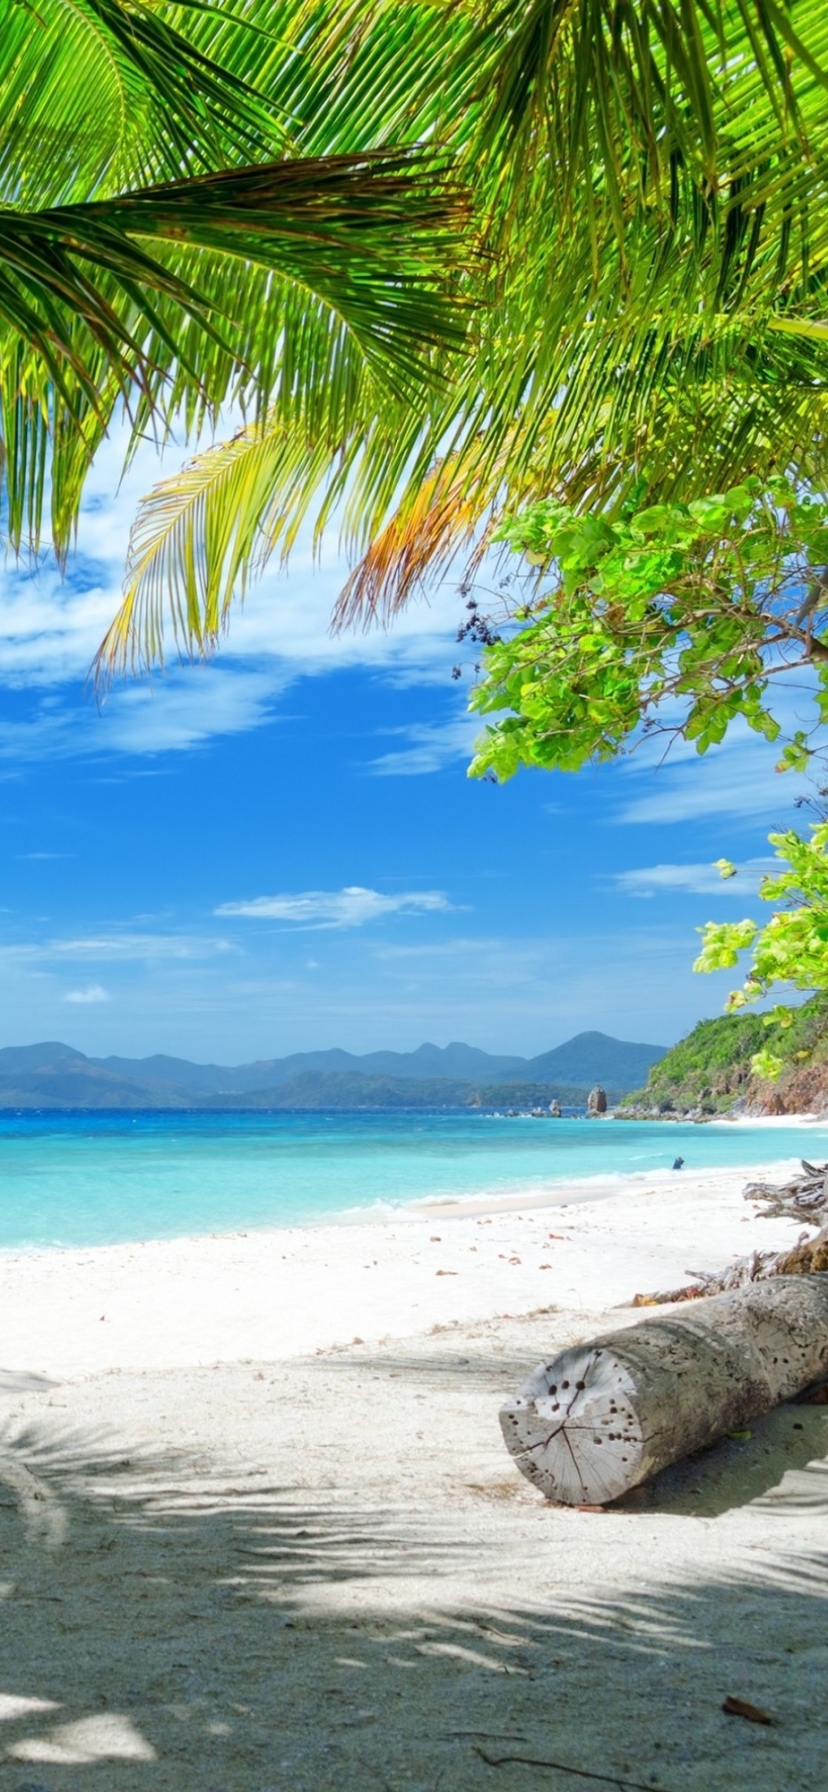 Descarga gratuita de fondo de pantalla para móvil de Playa, Zona Tropical, Tierra/naturaleza, Tropico.